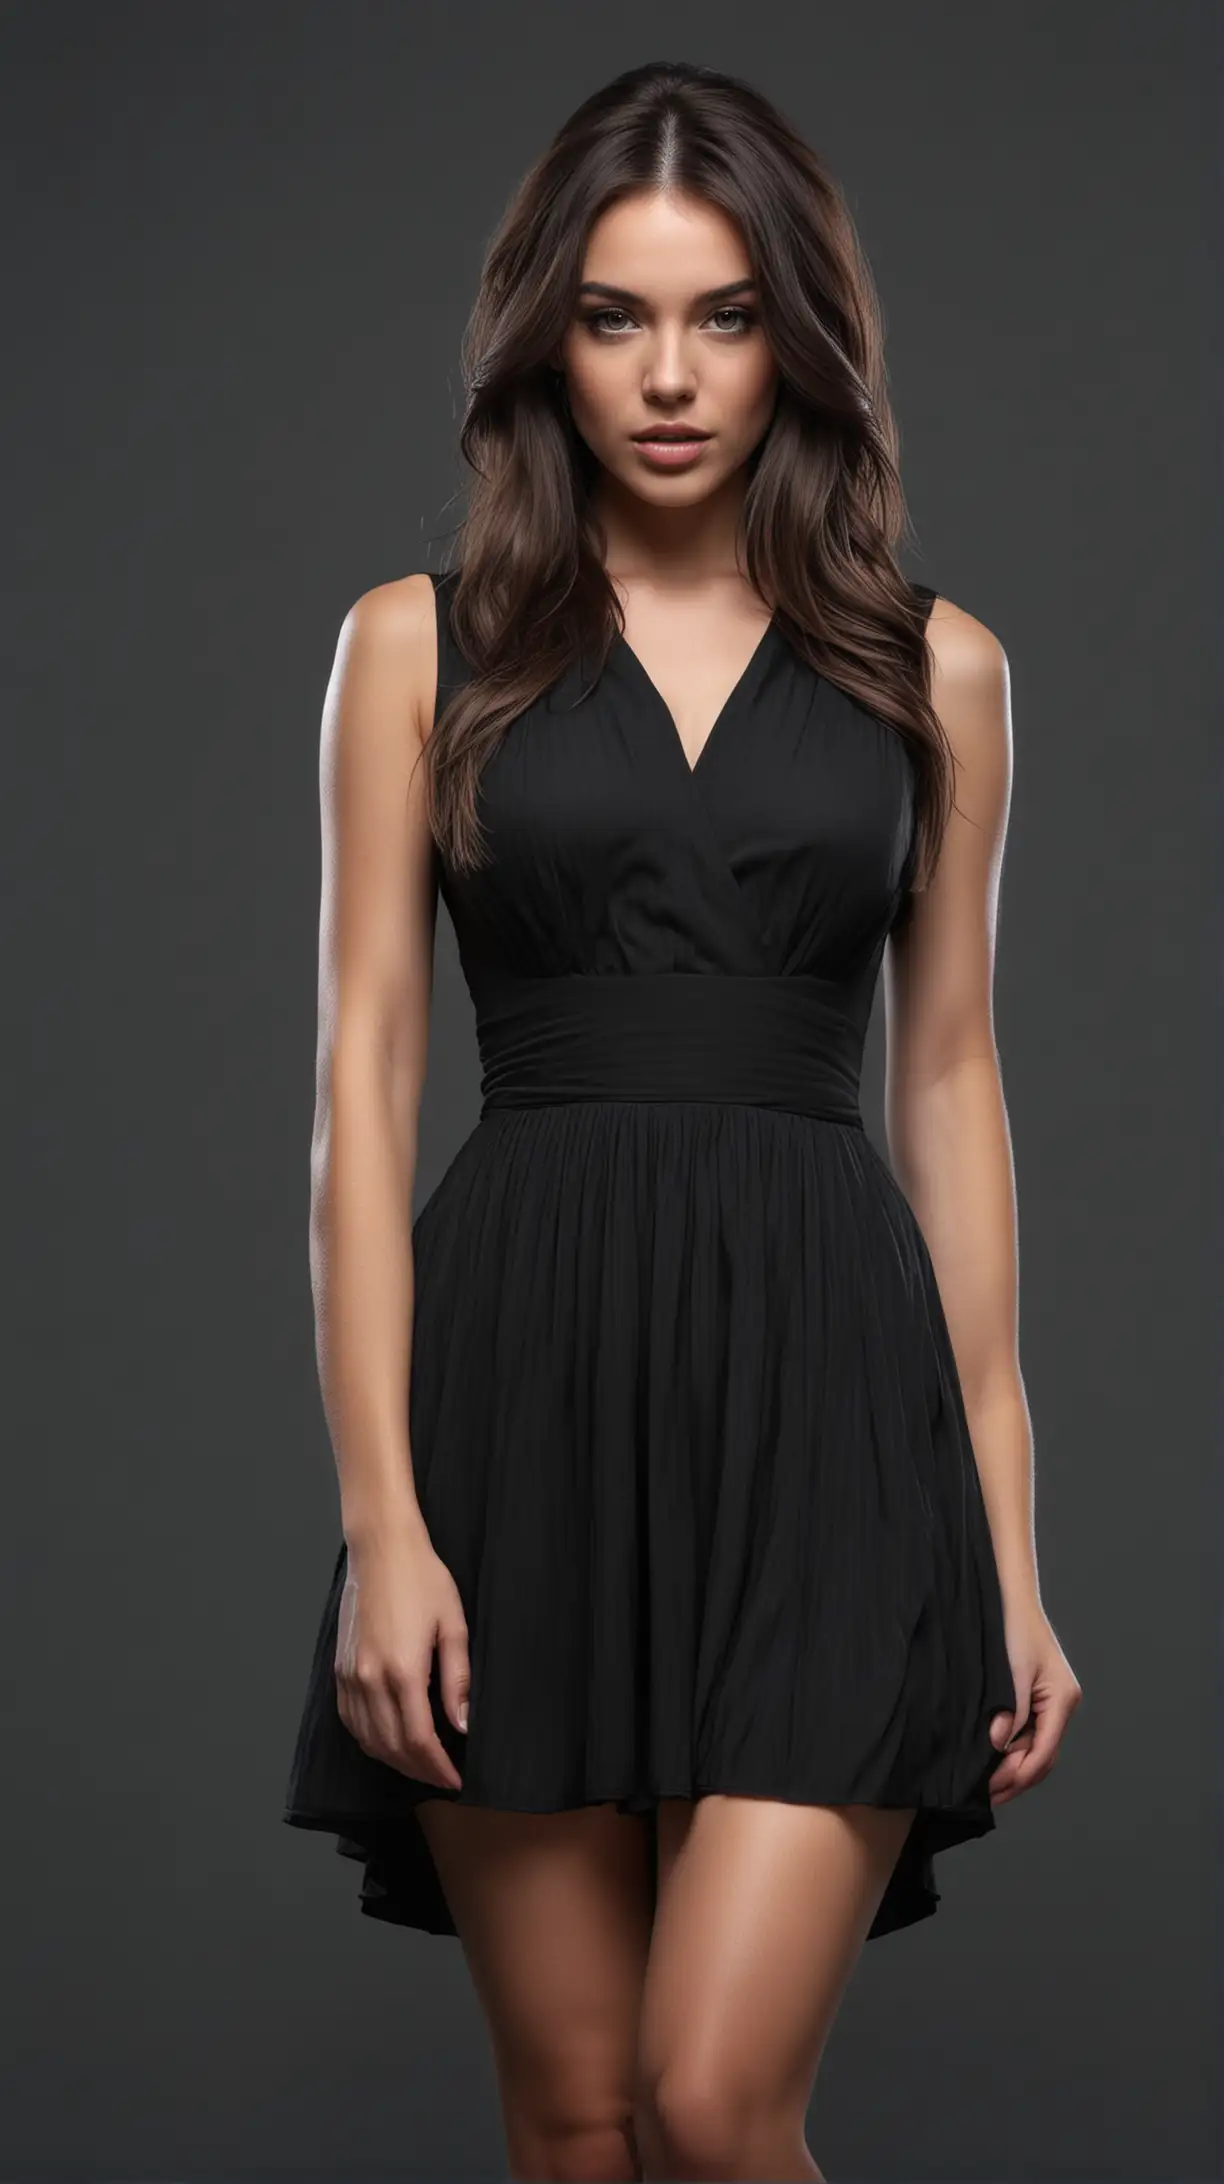 Attractive Woman in Dark Dress on Monochromatic Background in 4K HD Realism